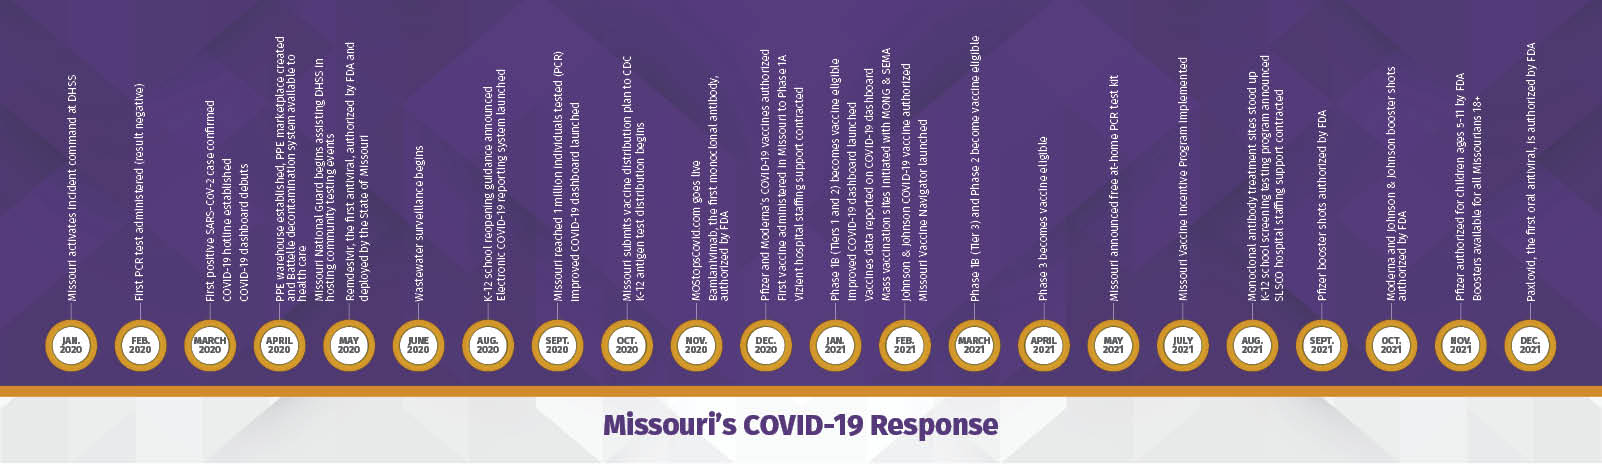 Missouri's Covid Response Timeline